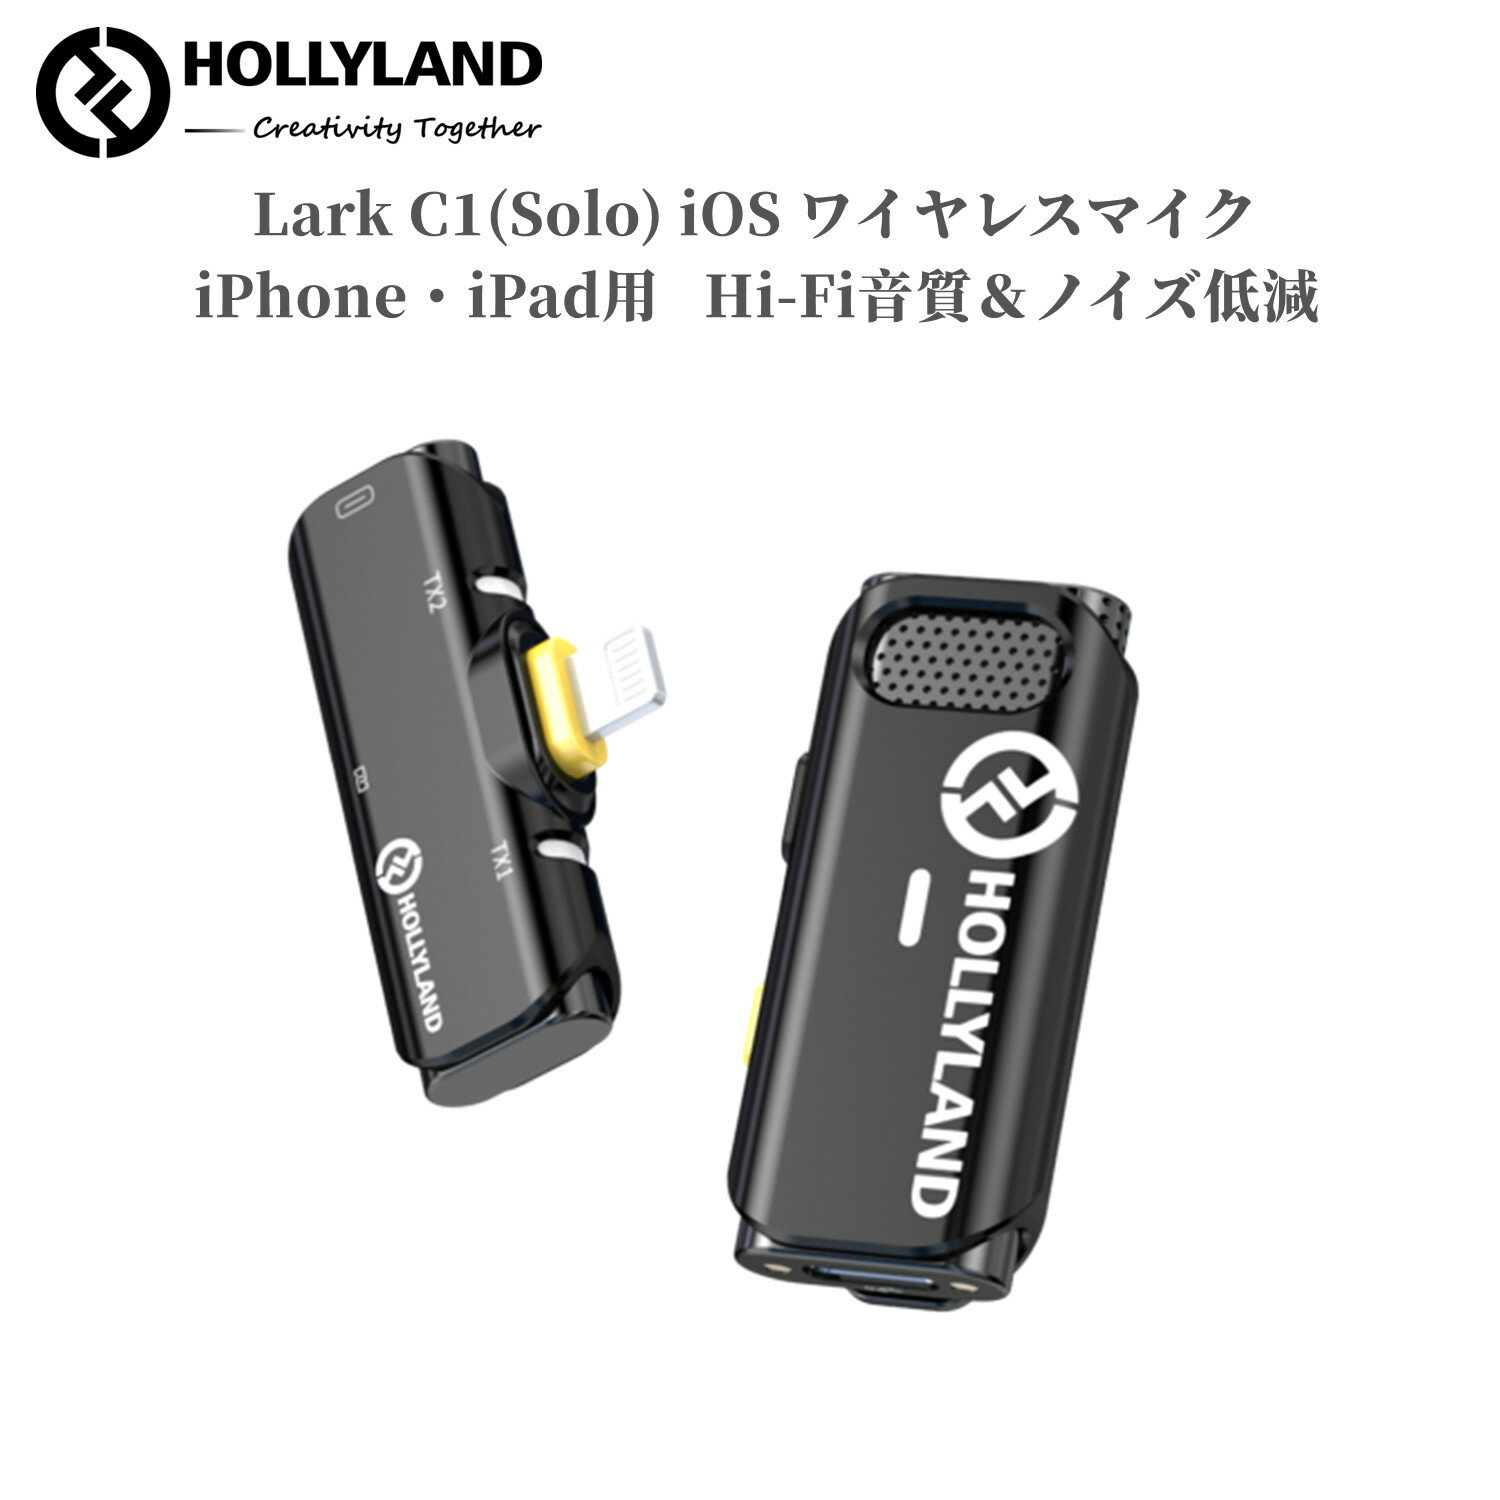 Hollyland Lark C1 iPhone